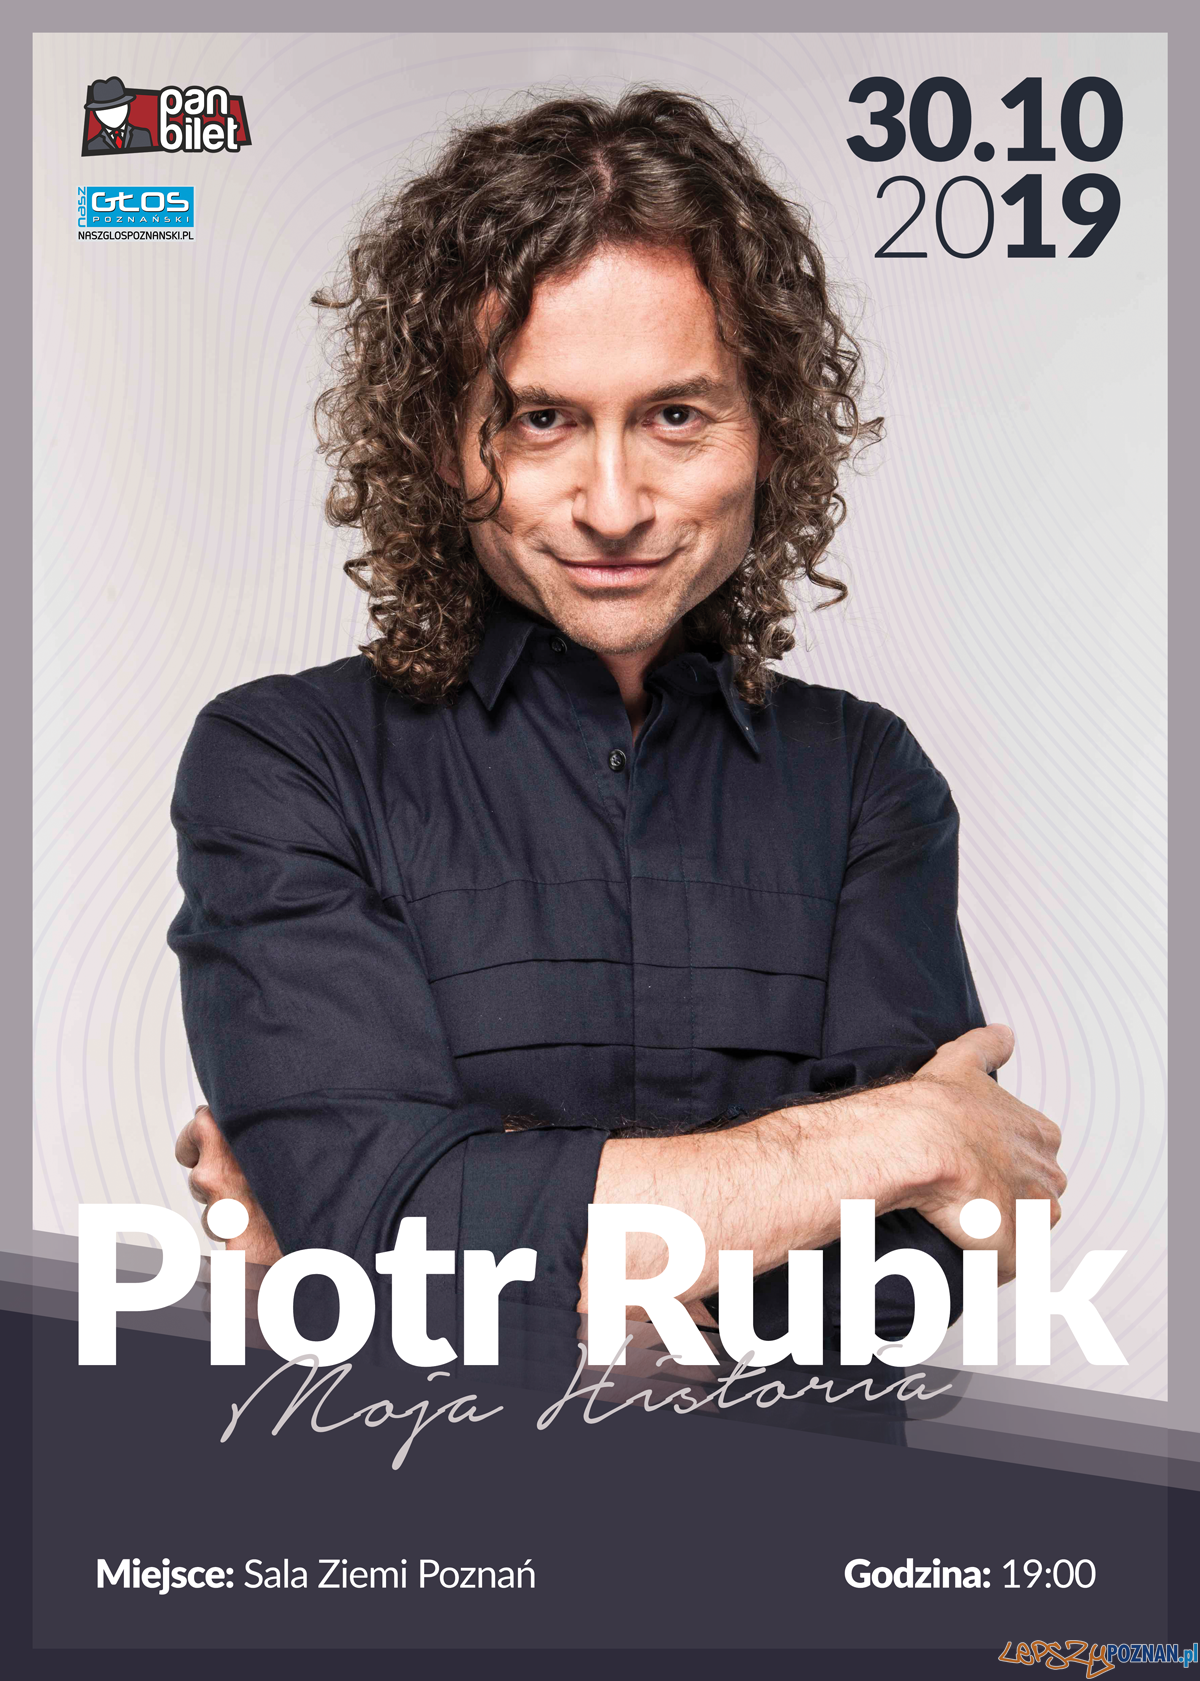 Piotr Rubik - Moja historia  Foto: materiały prasowe